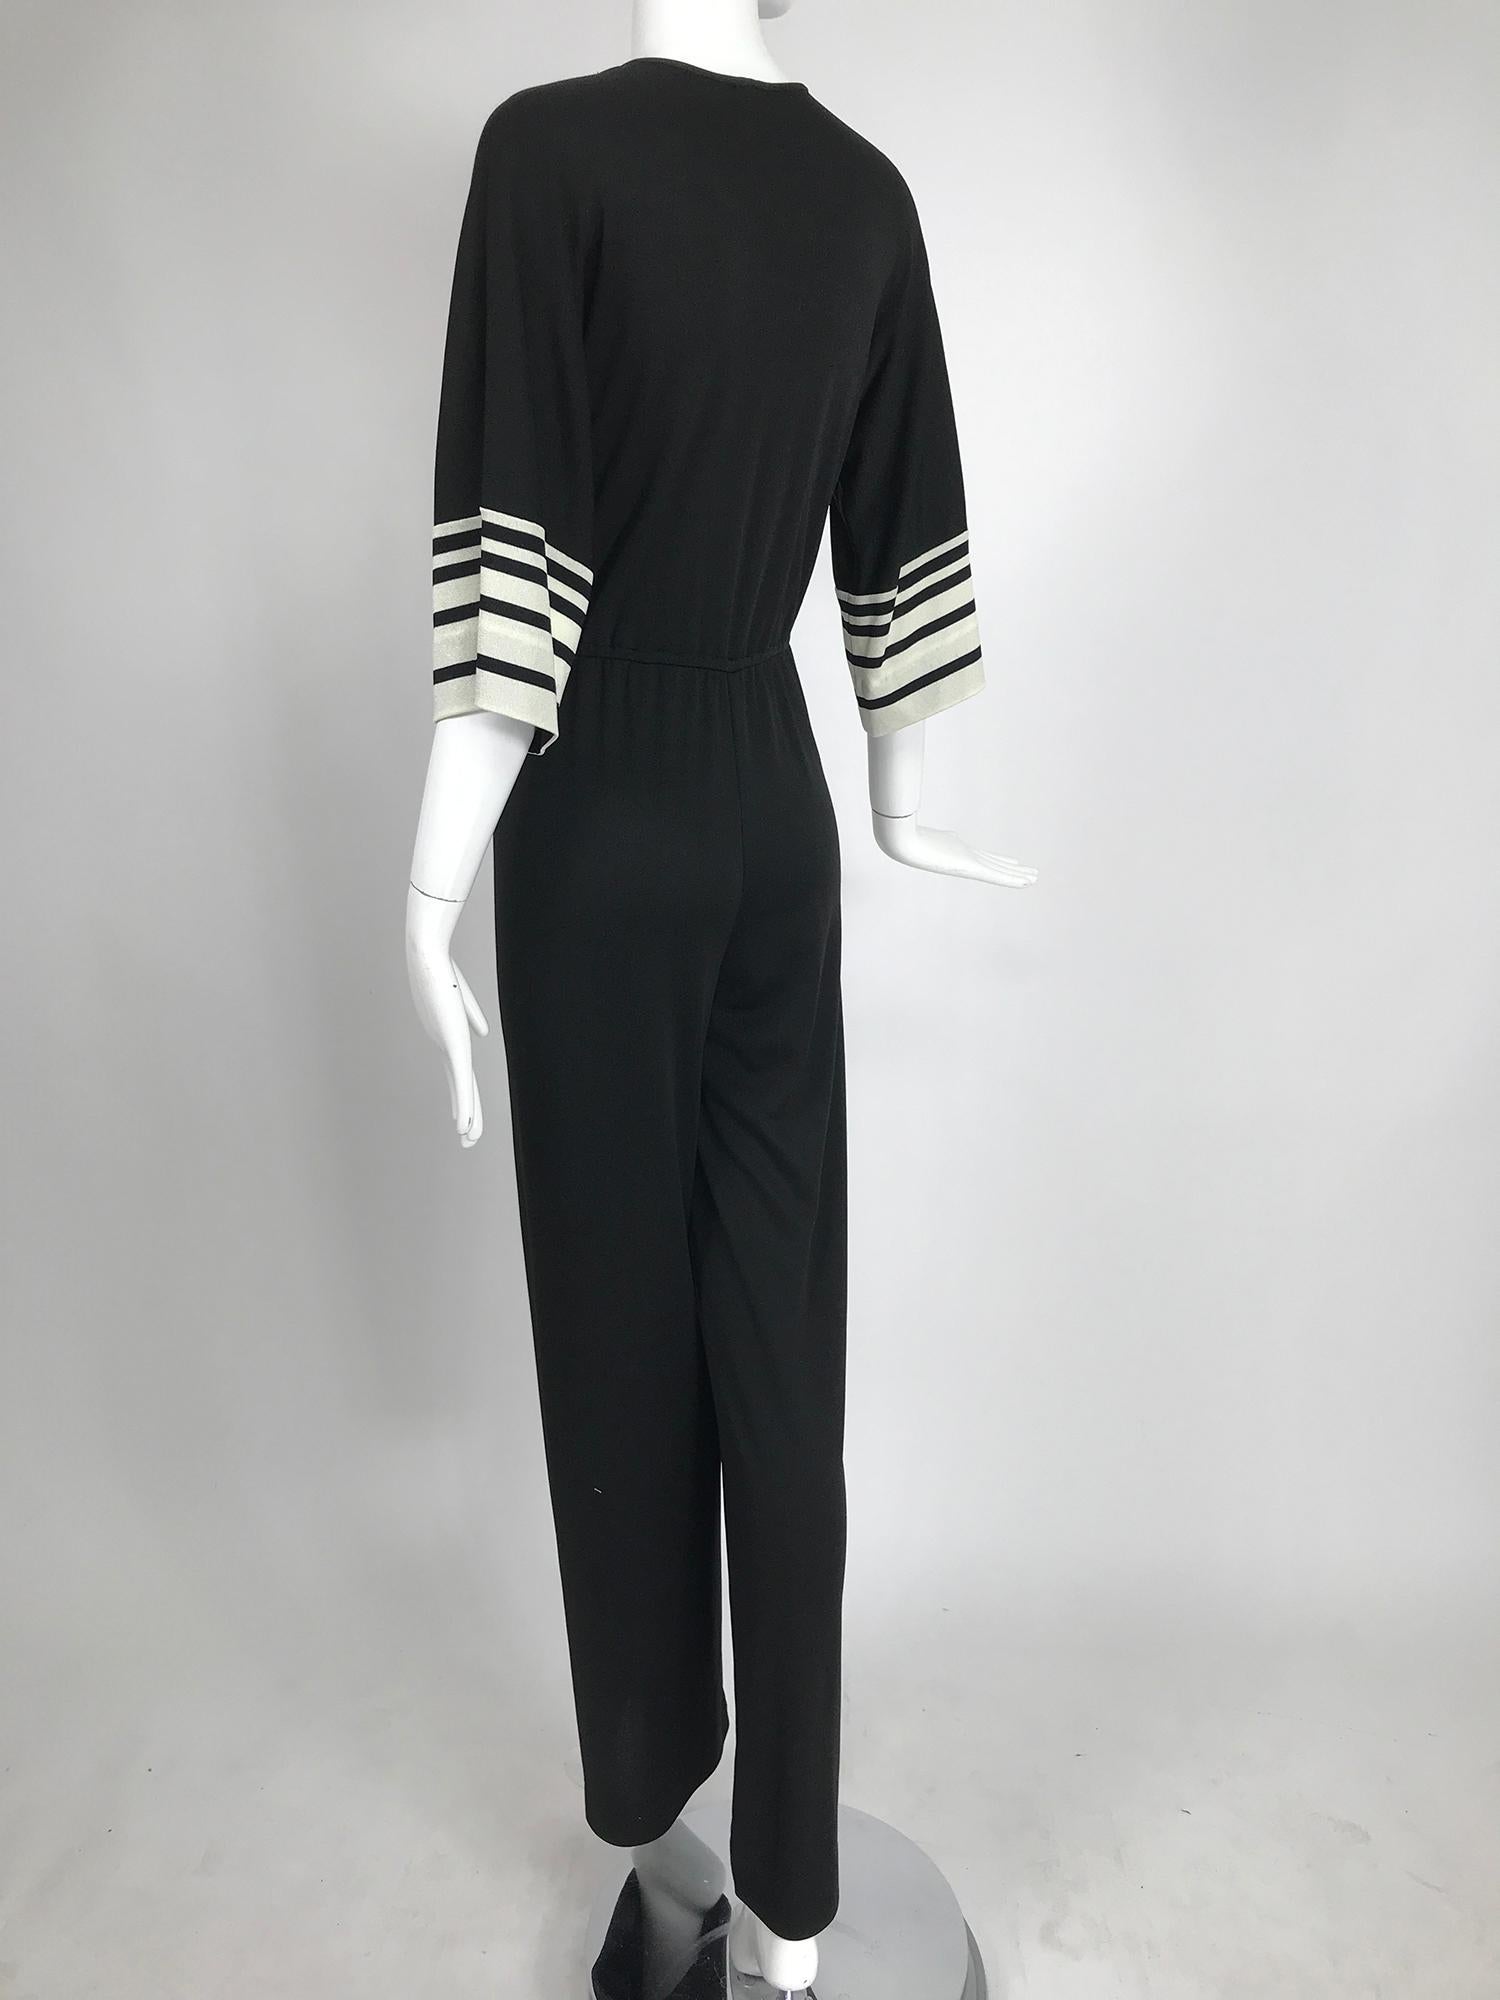 Vintage Clovis Ruffin Ruffinwear Black and White Jumpsuit 1970s 1